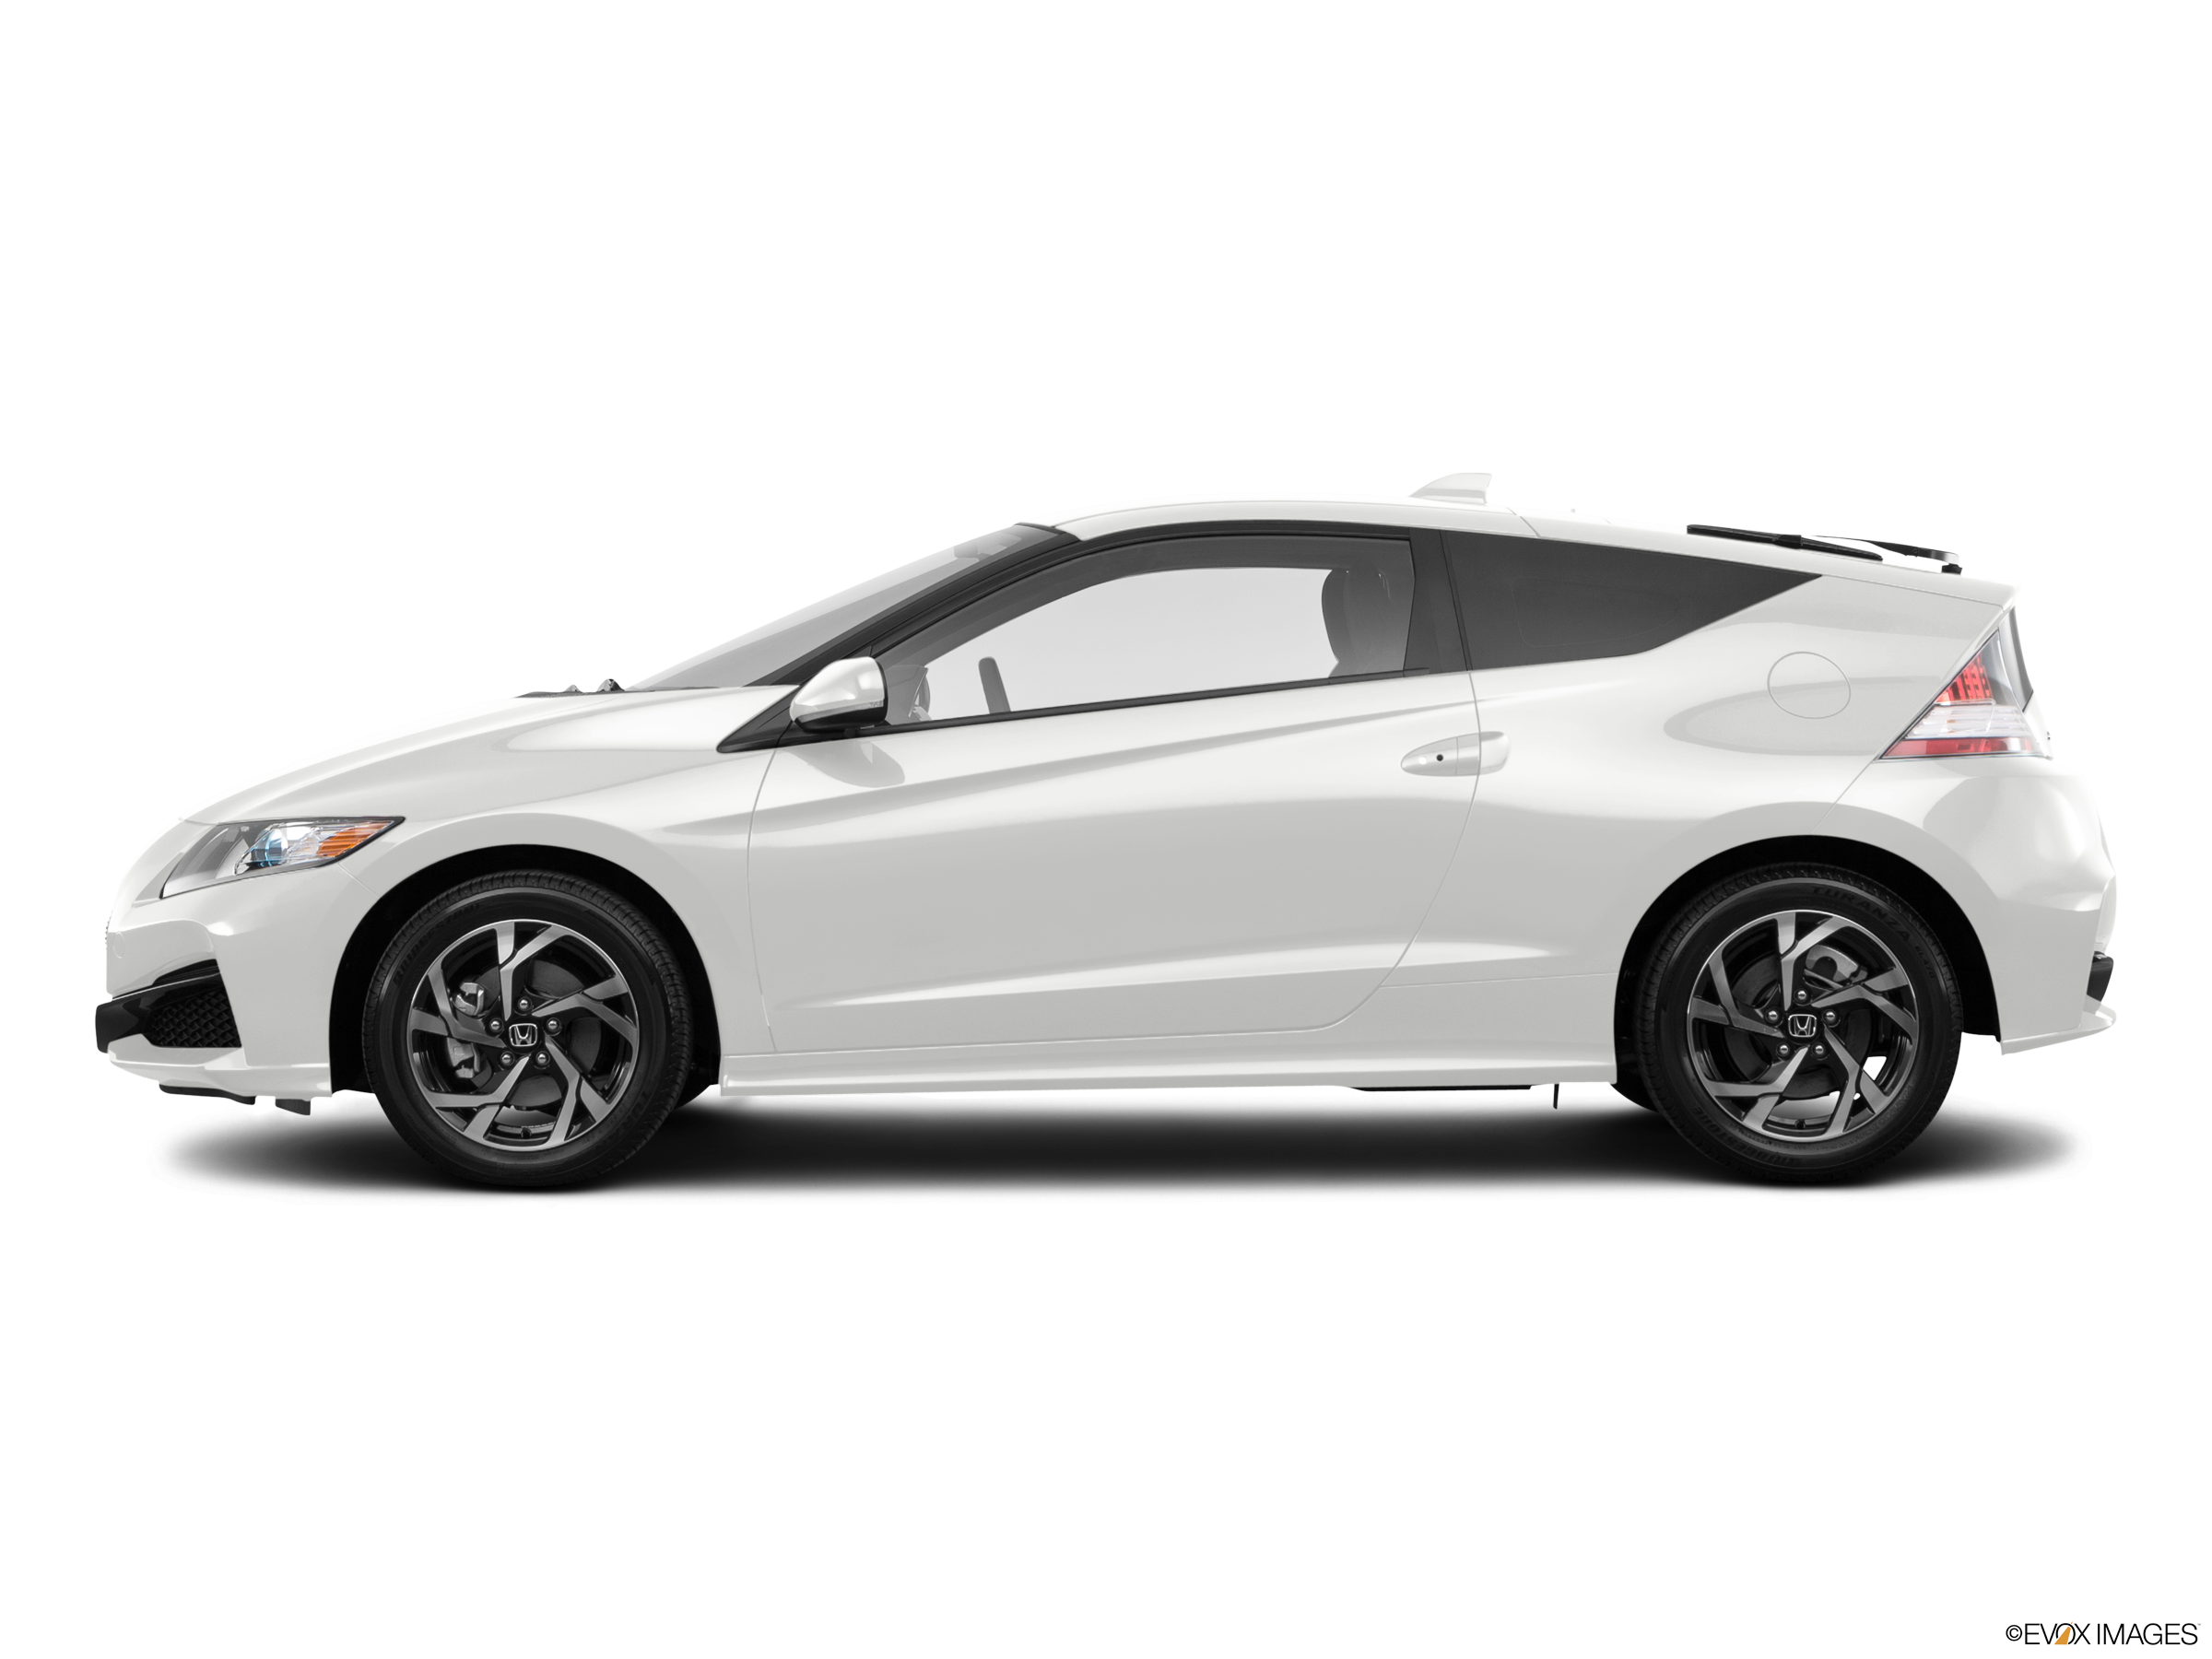 Honda CR-Z specs (2013-2016): performance, dimensions & technical